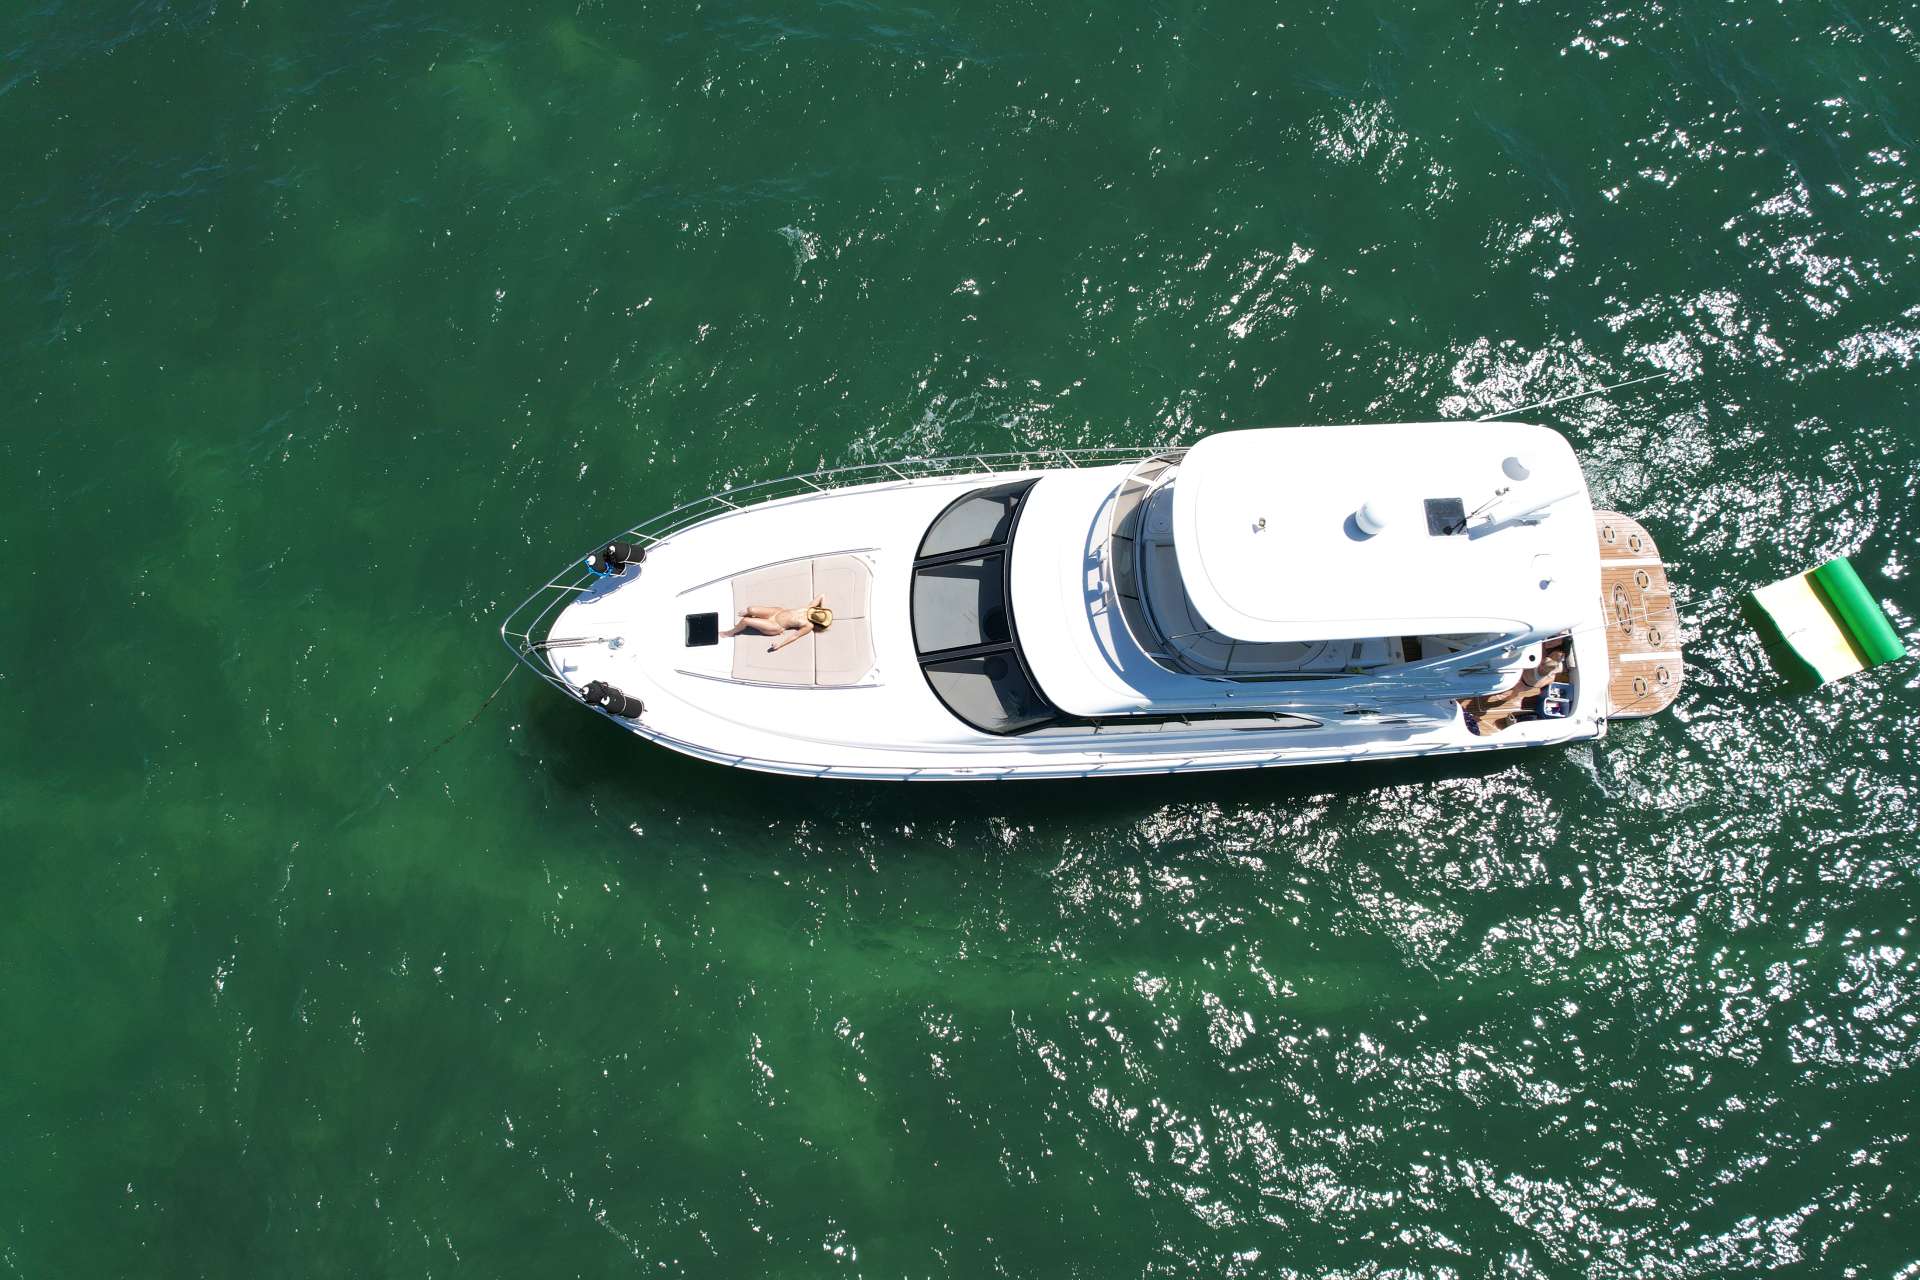 Sea Ray 60 Sundancer - Motor Boat Charter USA & Boat hire in United States Florida Miami Beach Miami Beach Marina 2